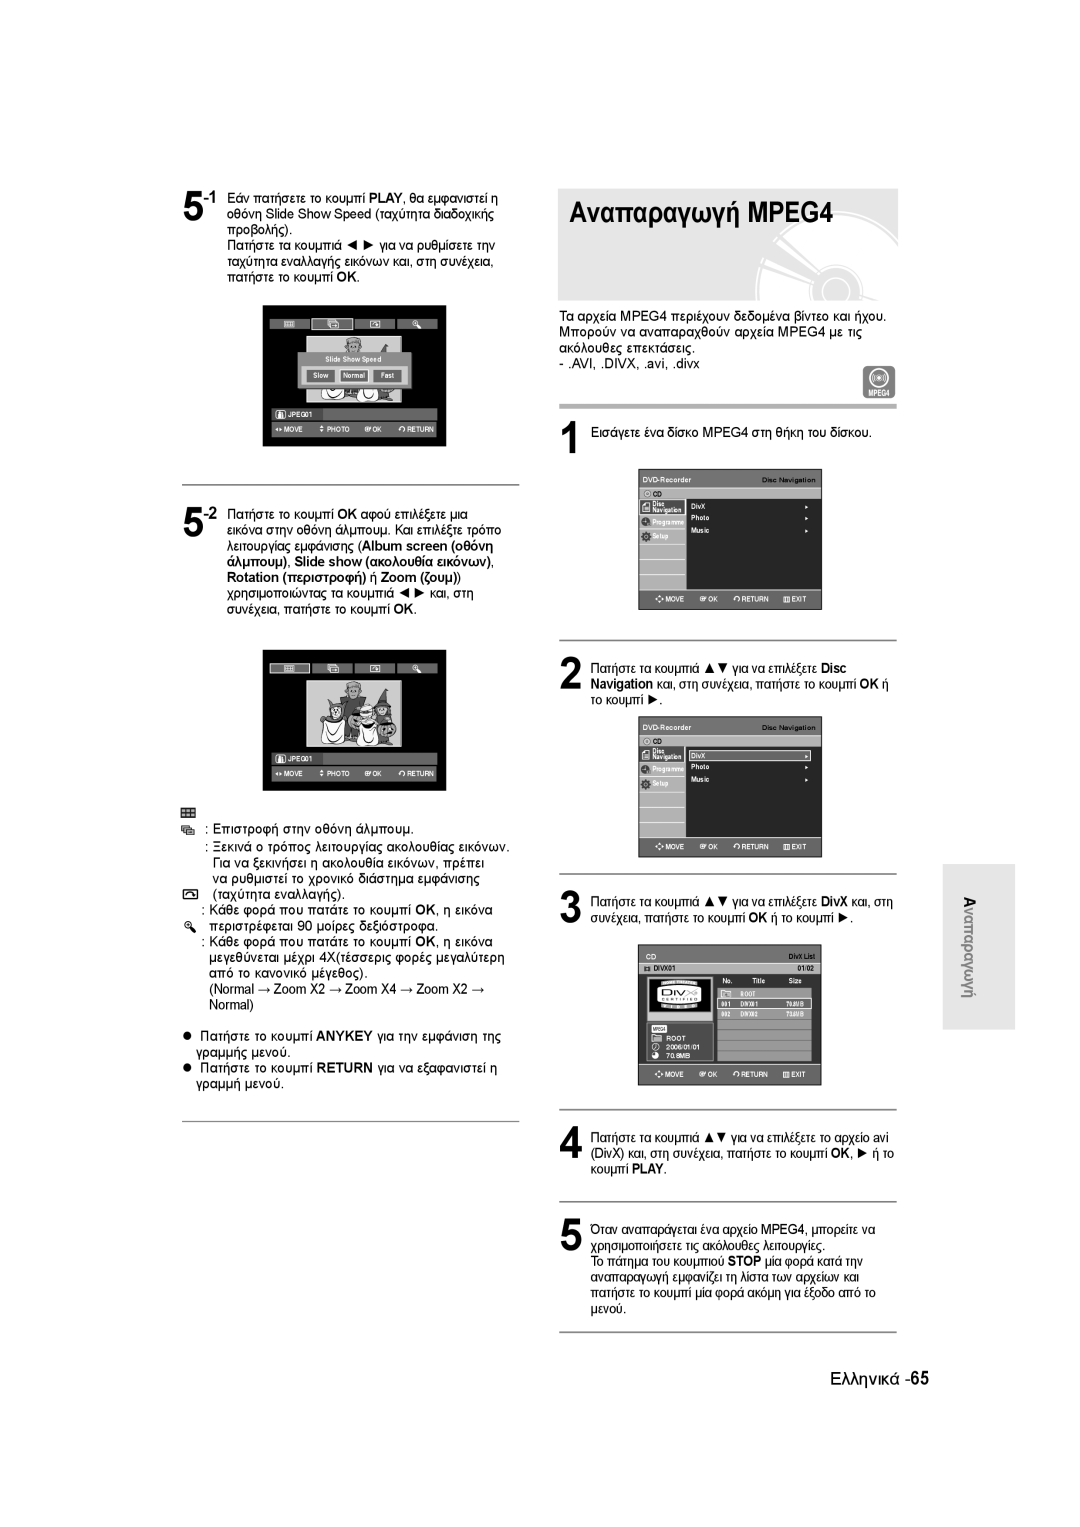 Samsung DVD-R135/XEB, DVD-R135/EUR, DVD-R135/XEH manual Αναπαραγωγή MPEG4, Πατήστε τα κουμπιά για να επιλέξετε DivX και, στη 